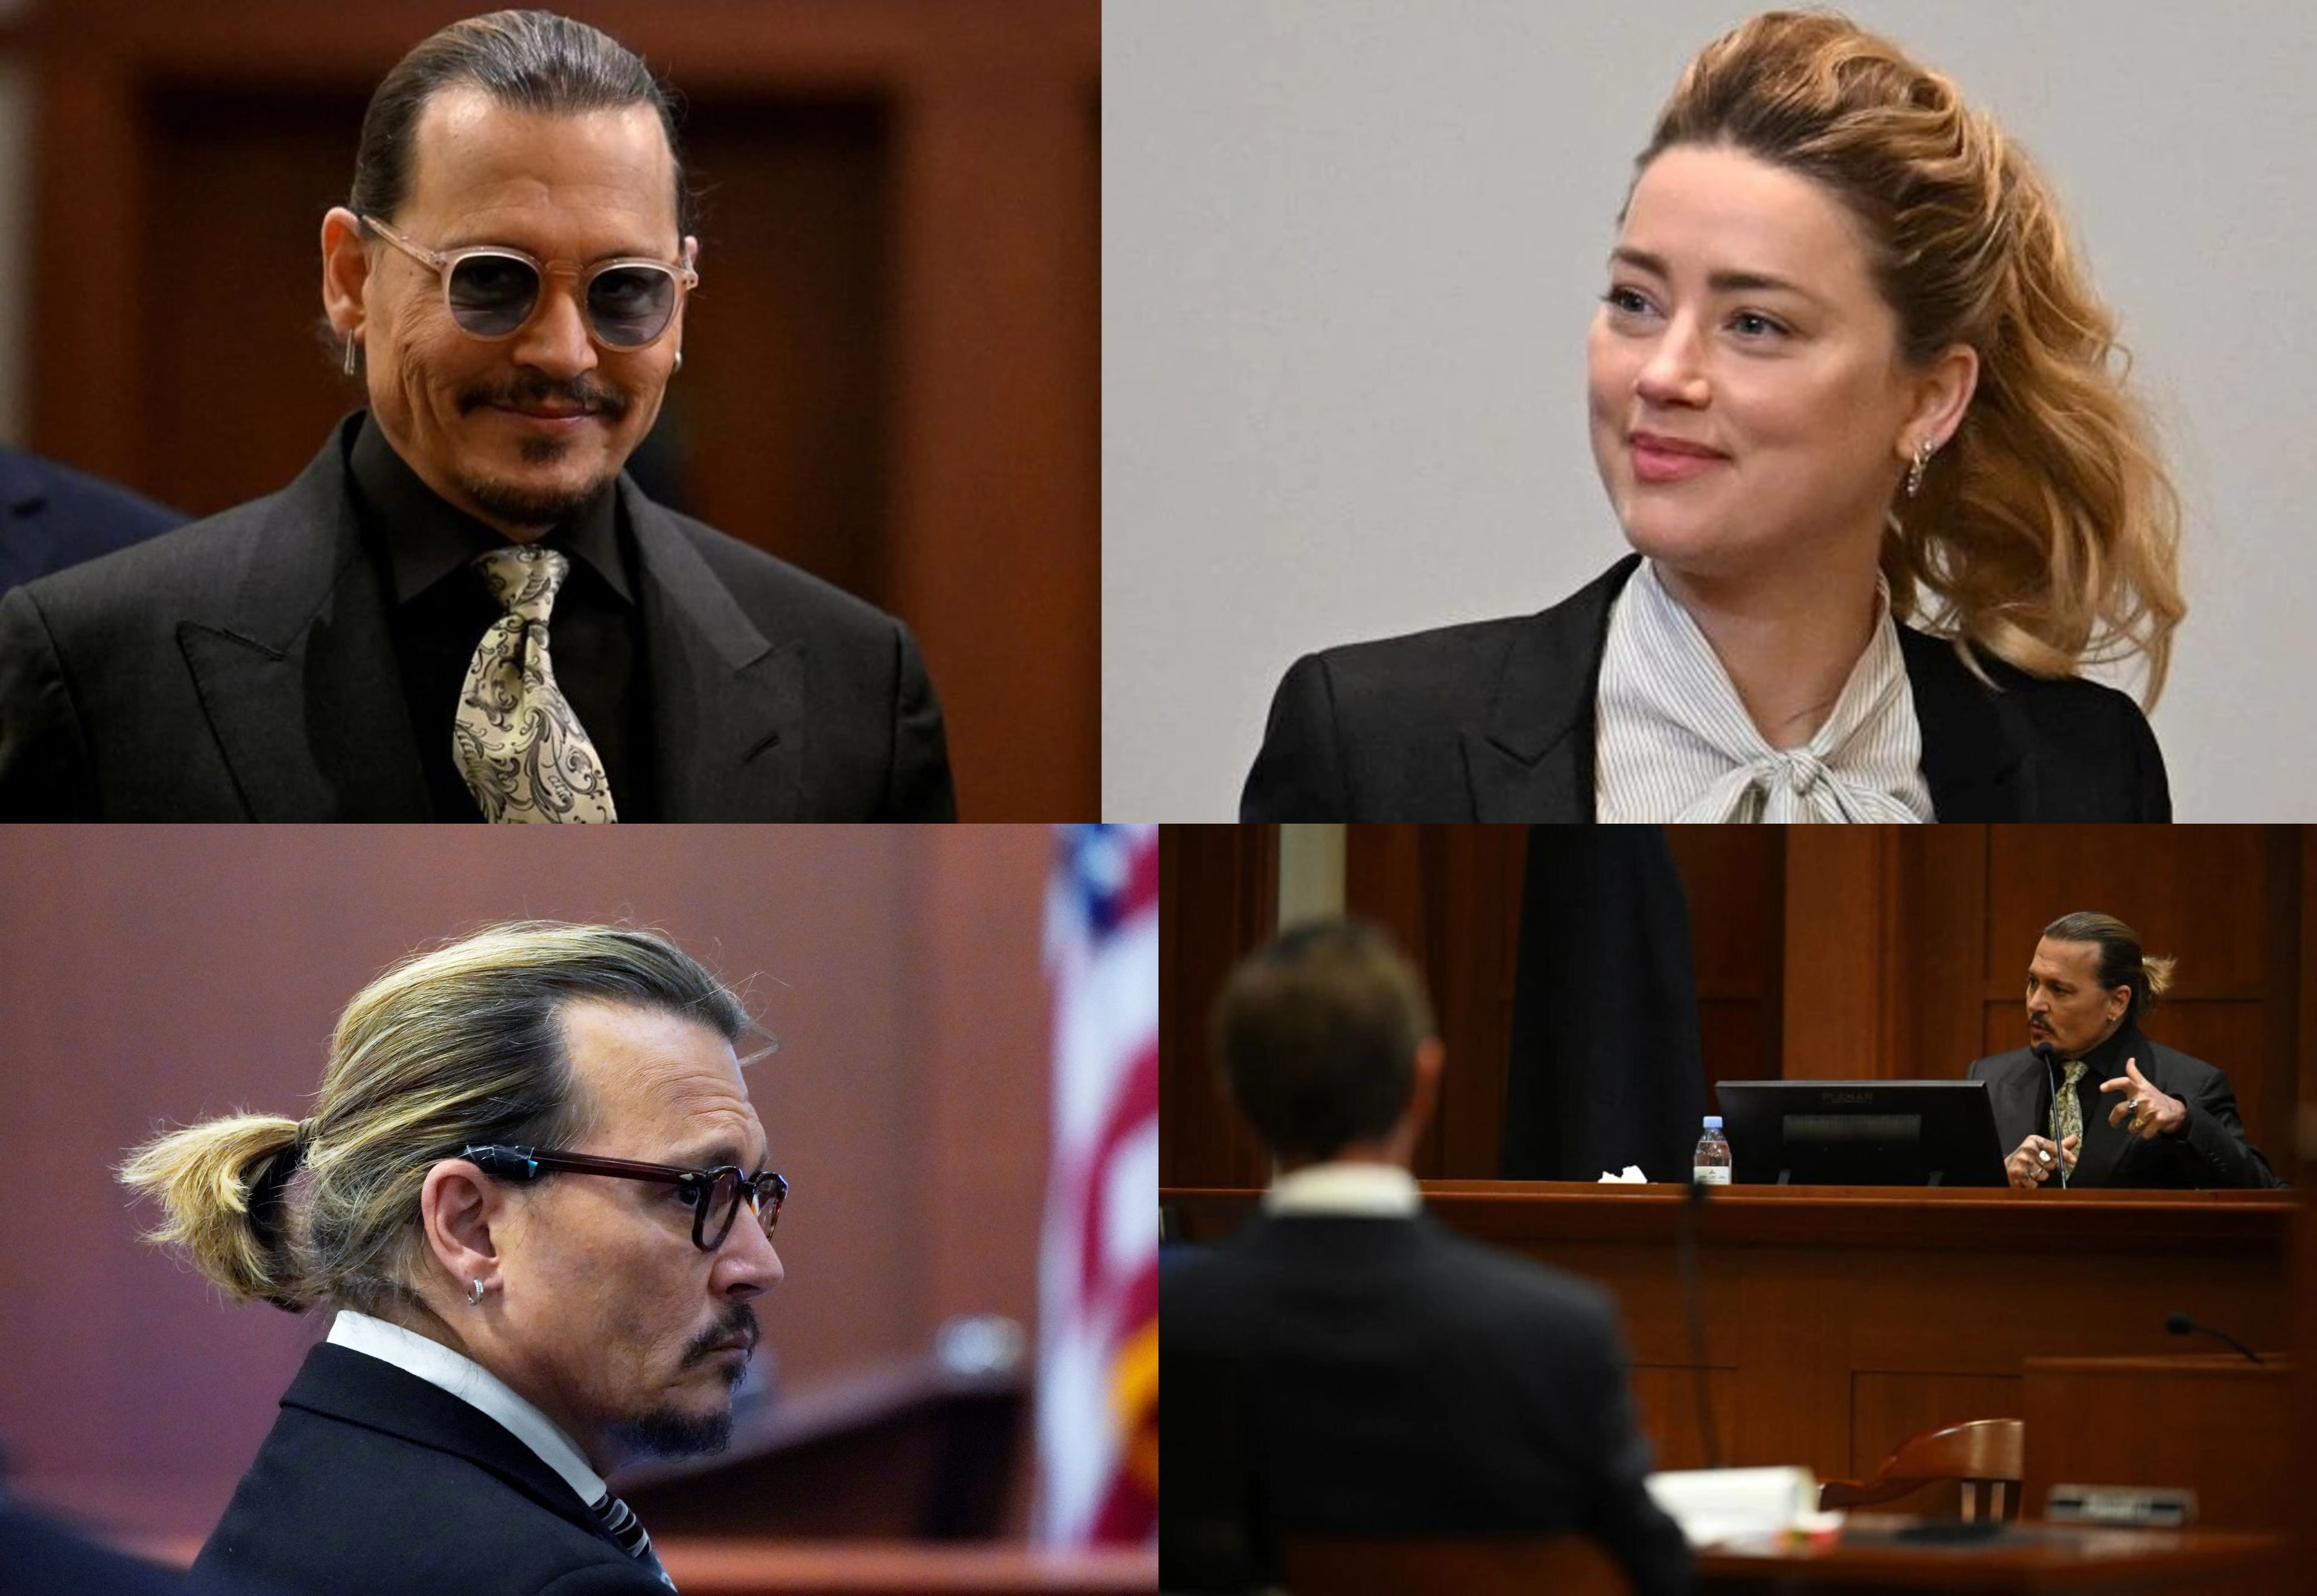 Johnny Depp Calls Amber Heard Allegations 'Heinous,' Says He Never Struck Her